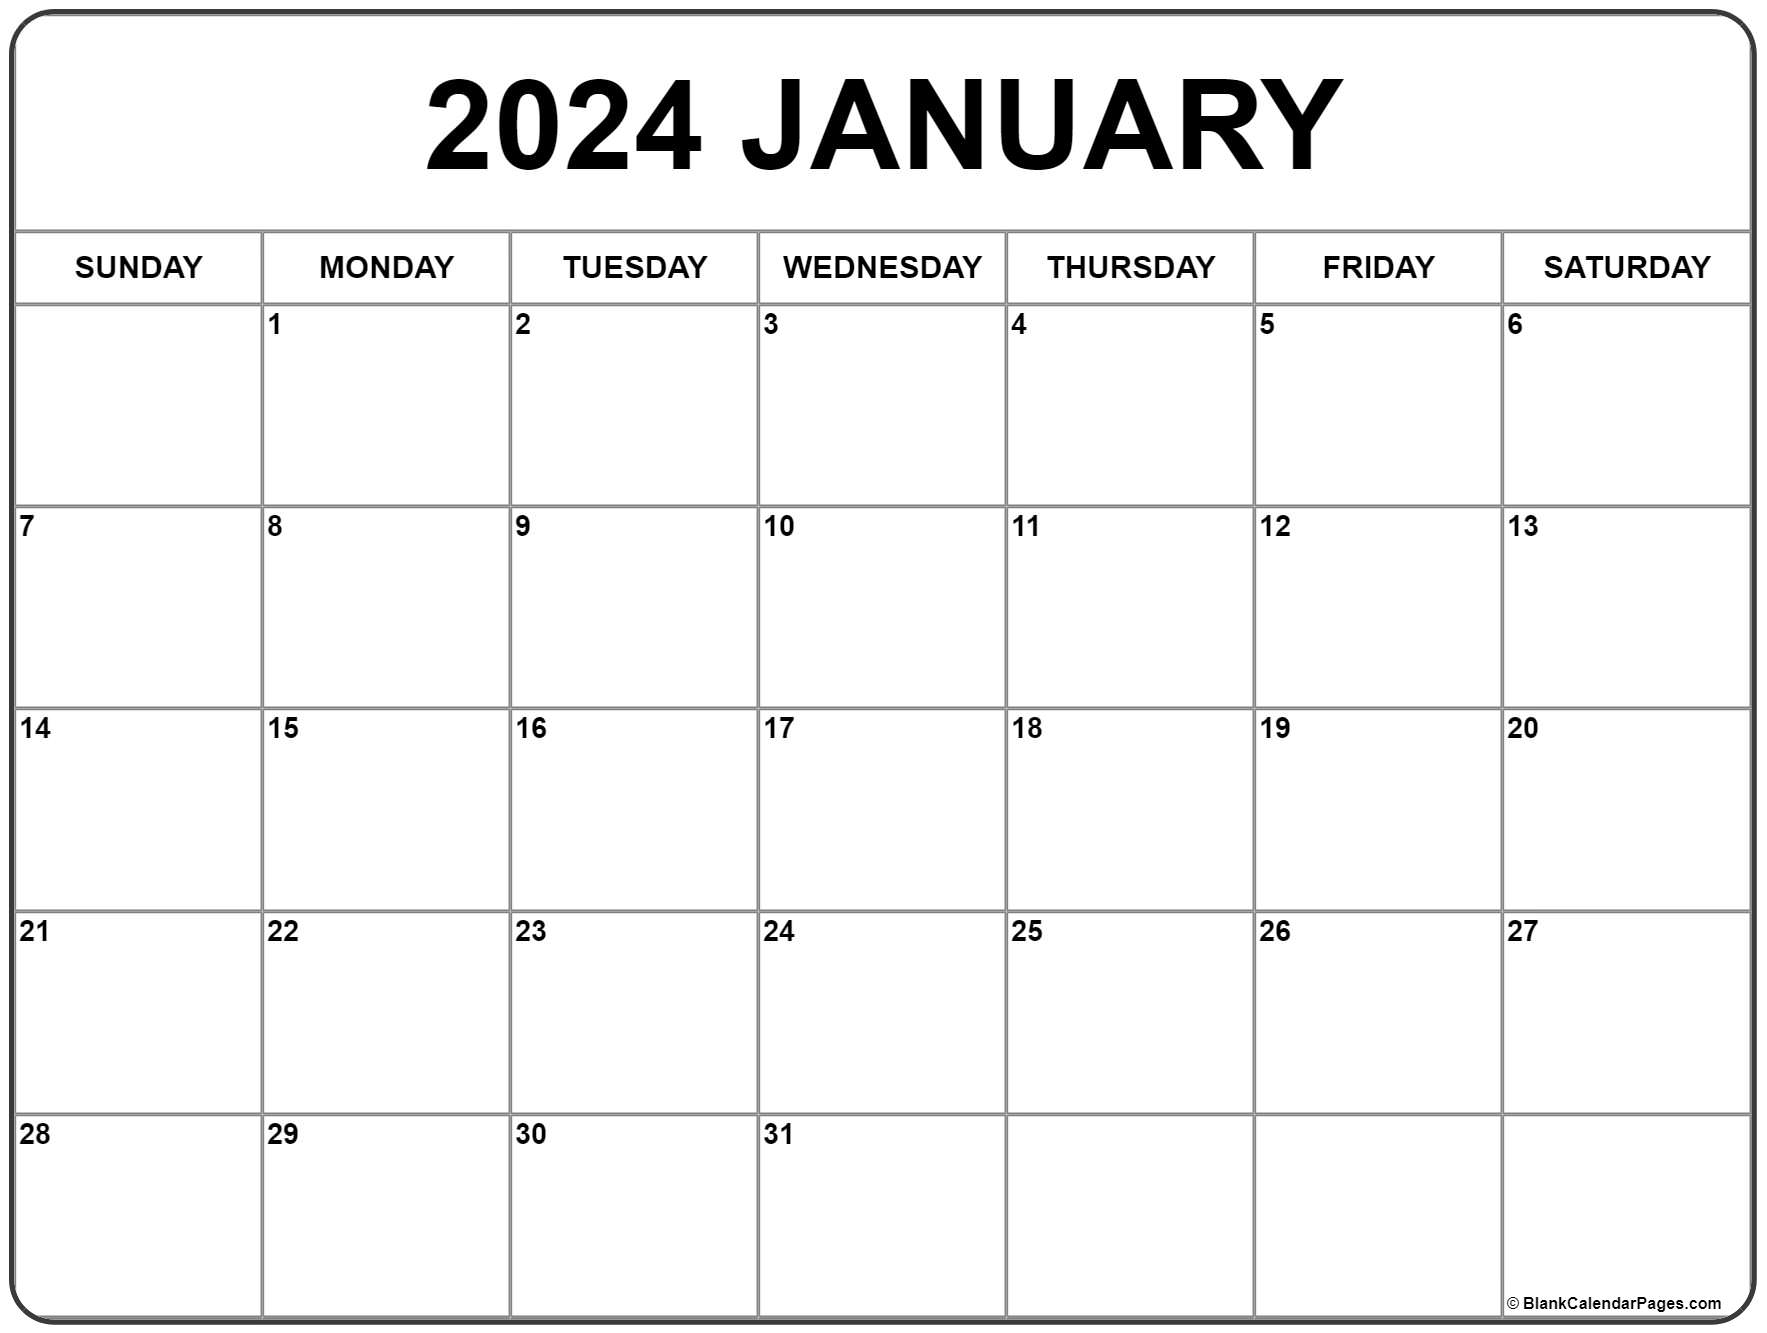 January 2021 Calendar Template January 2021 calendar | free printable monthly calendars